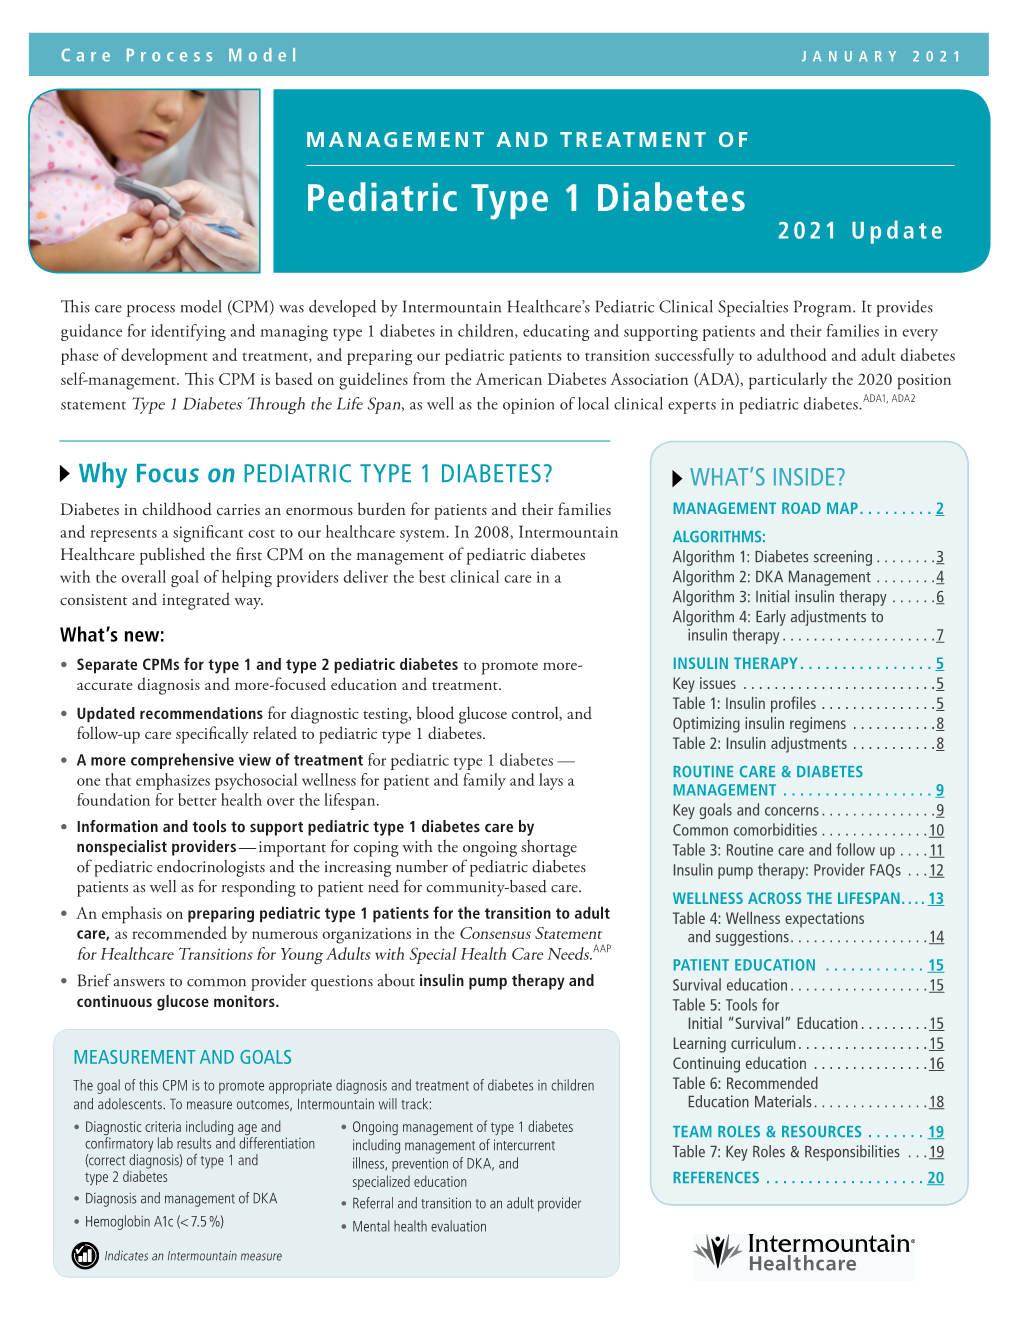 Pediatric Type 1 Diabetes 2021 Update